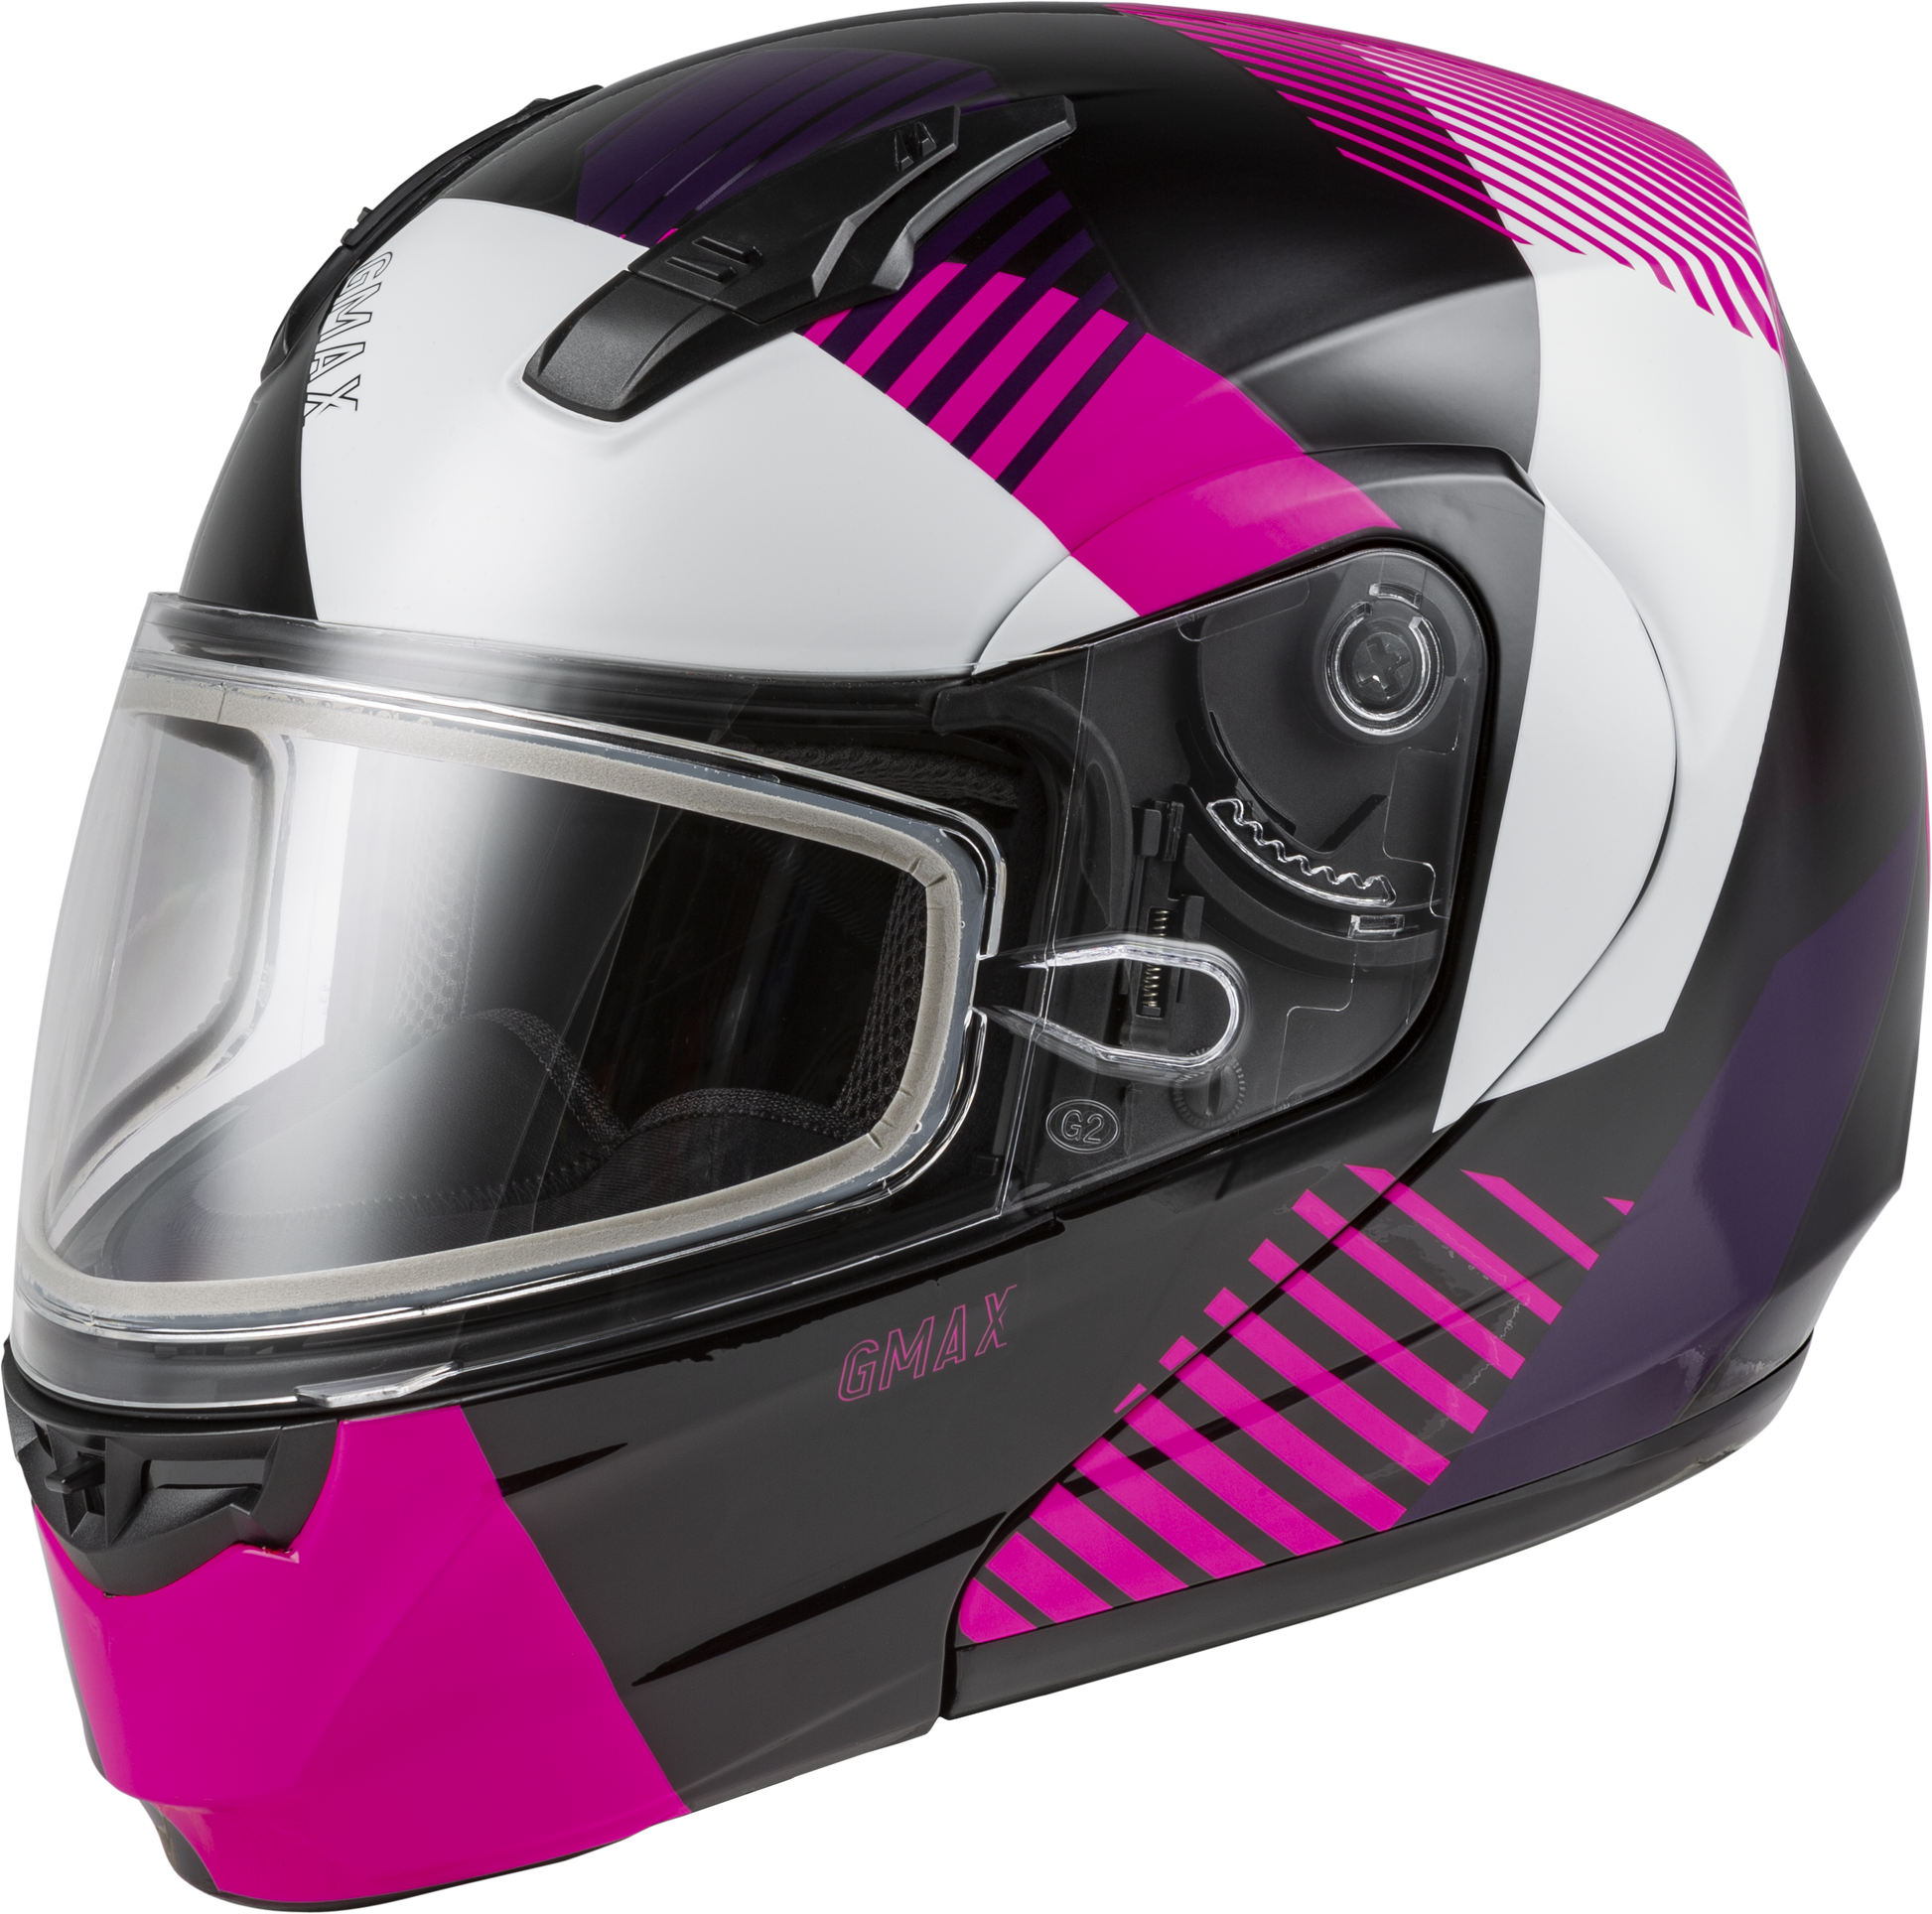 Gmax 72-5936 MD-04S 'Reserve' Modular Snow Helmet Black/Pink/White